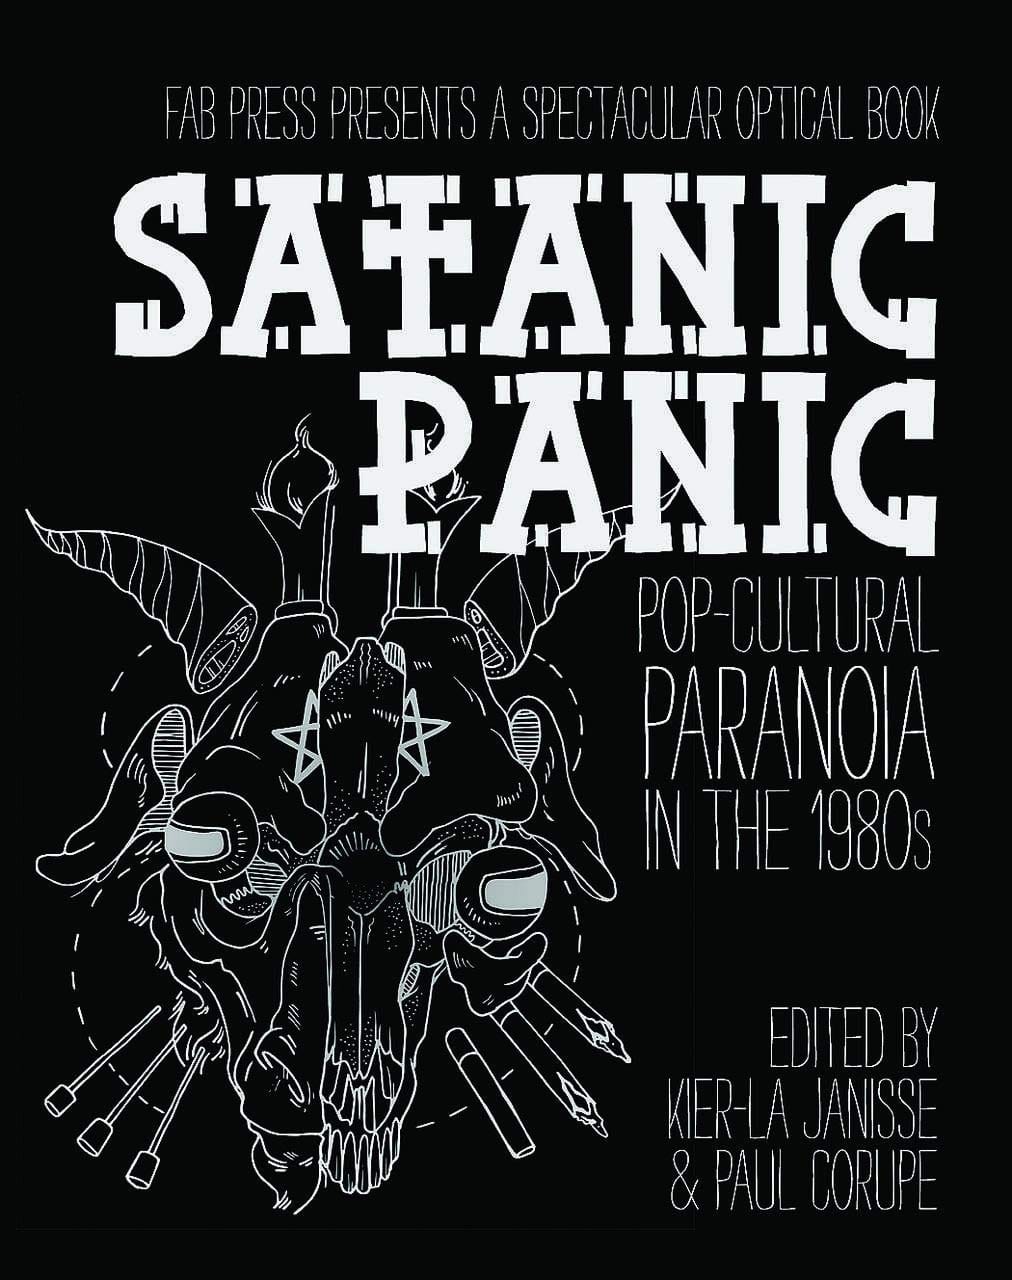 Satanic Panic: Pop-Cultural Paranoia in the 1980s - Third Eye